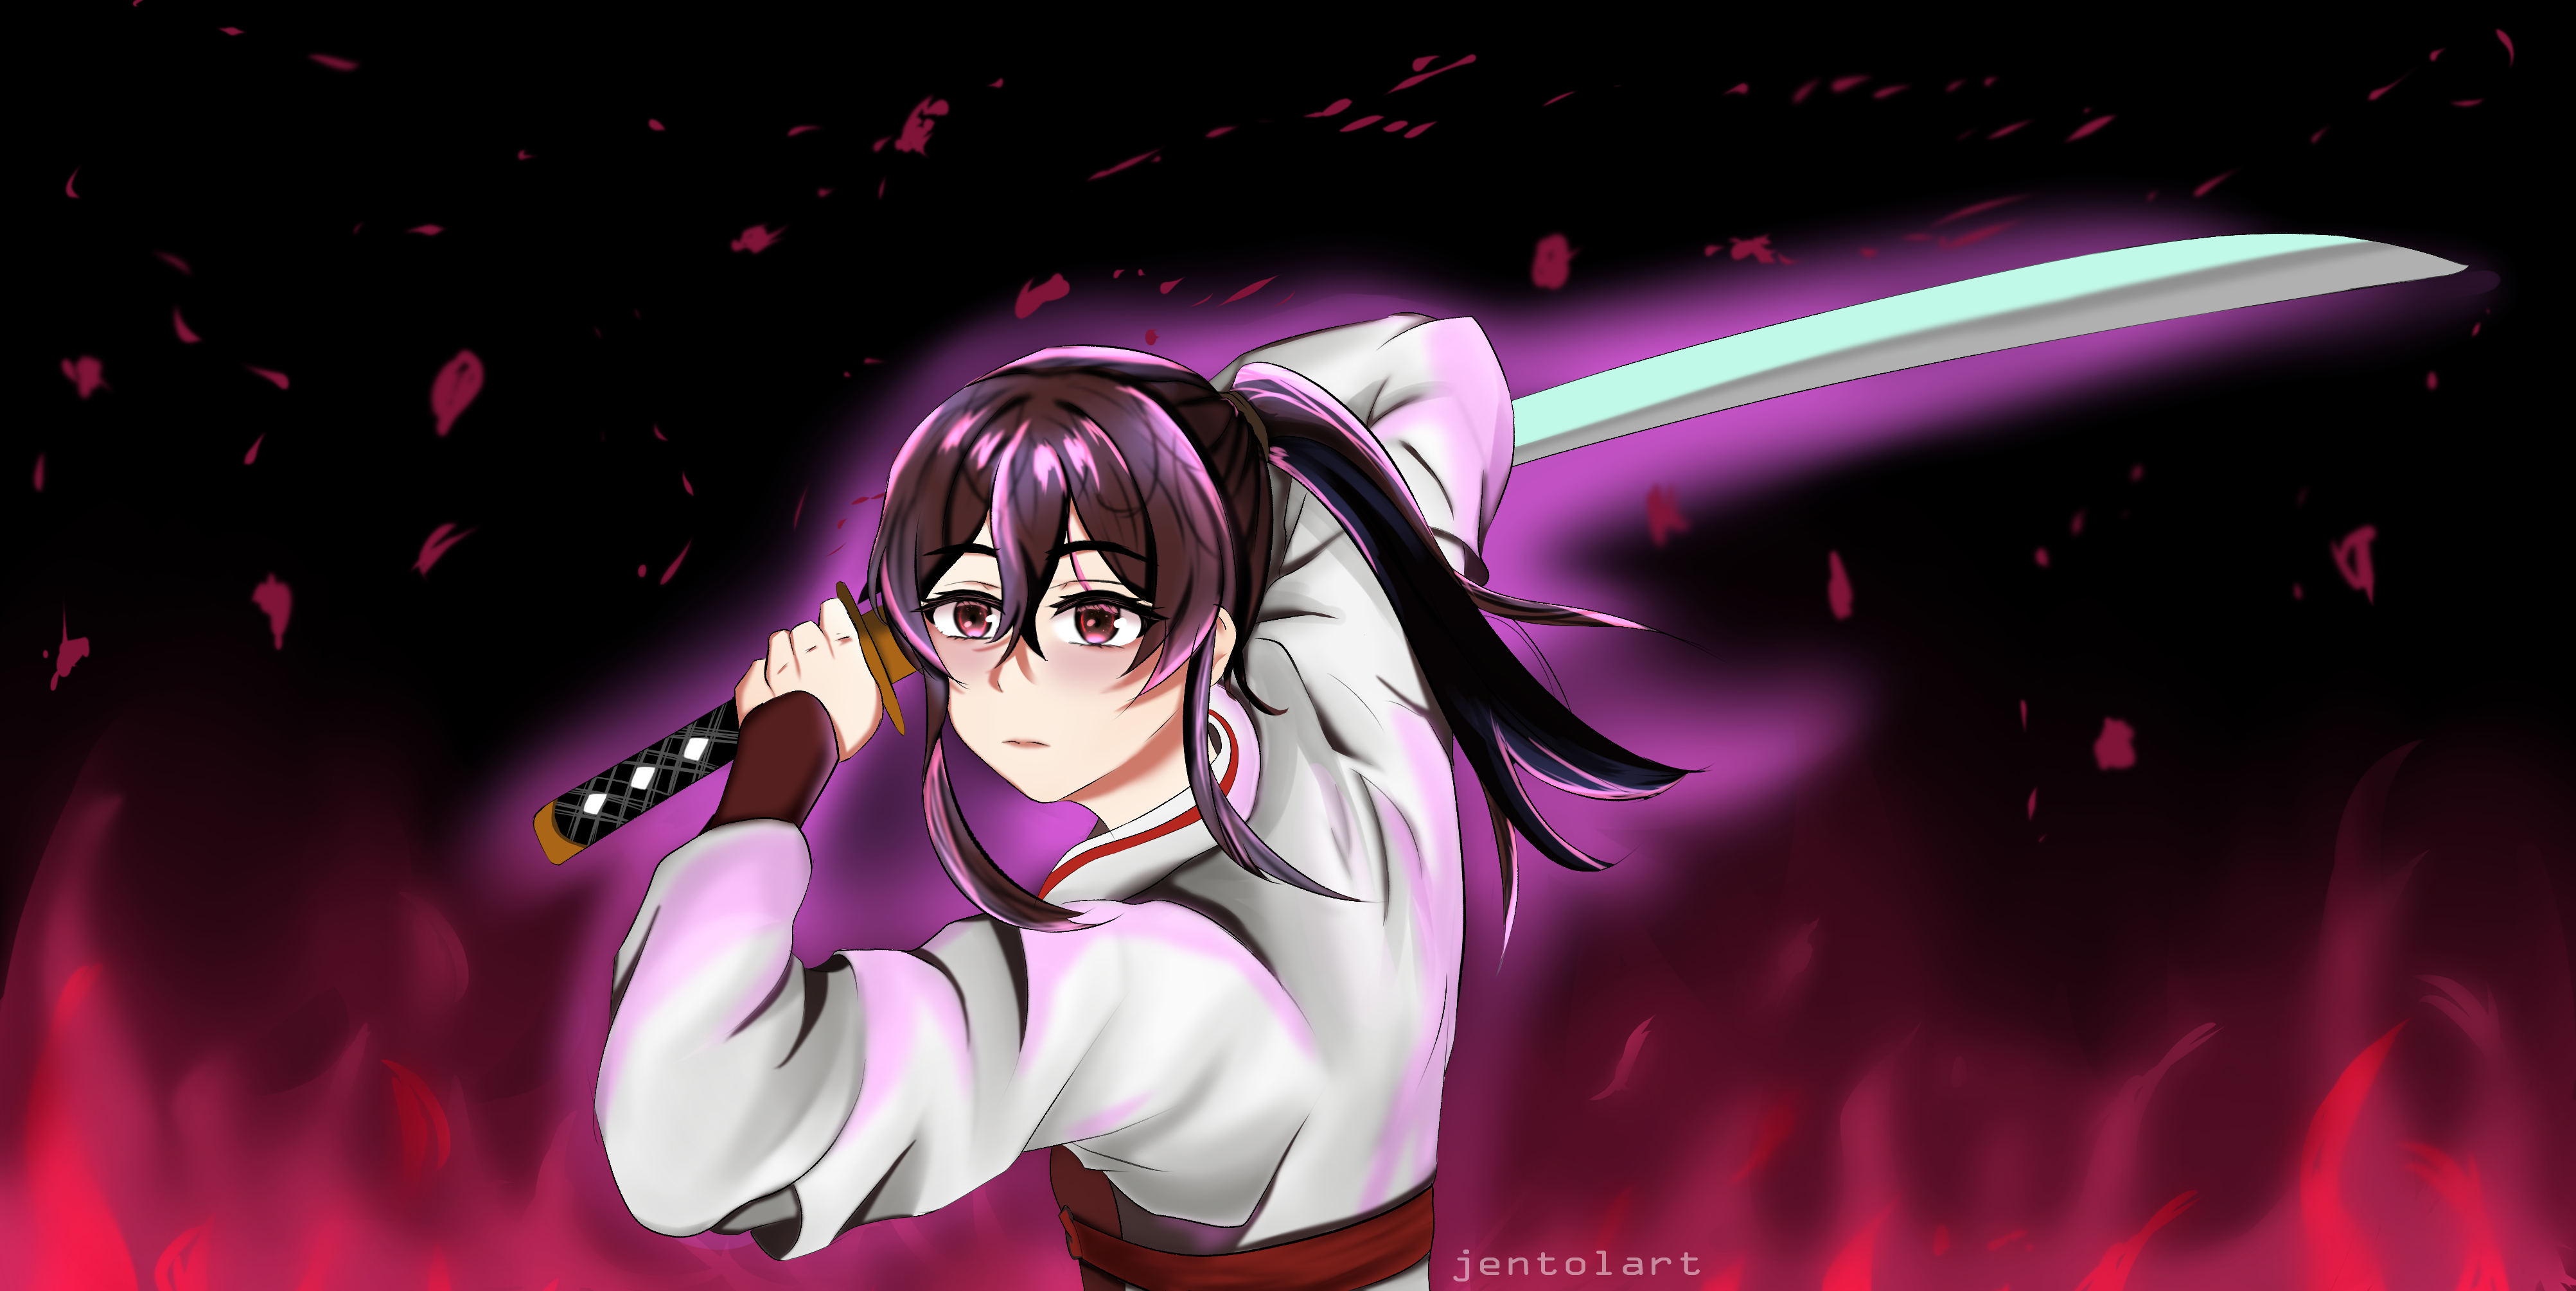 anime girl holding a sword by Jentolart